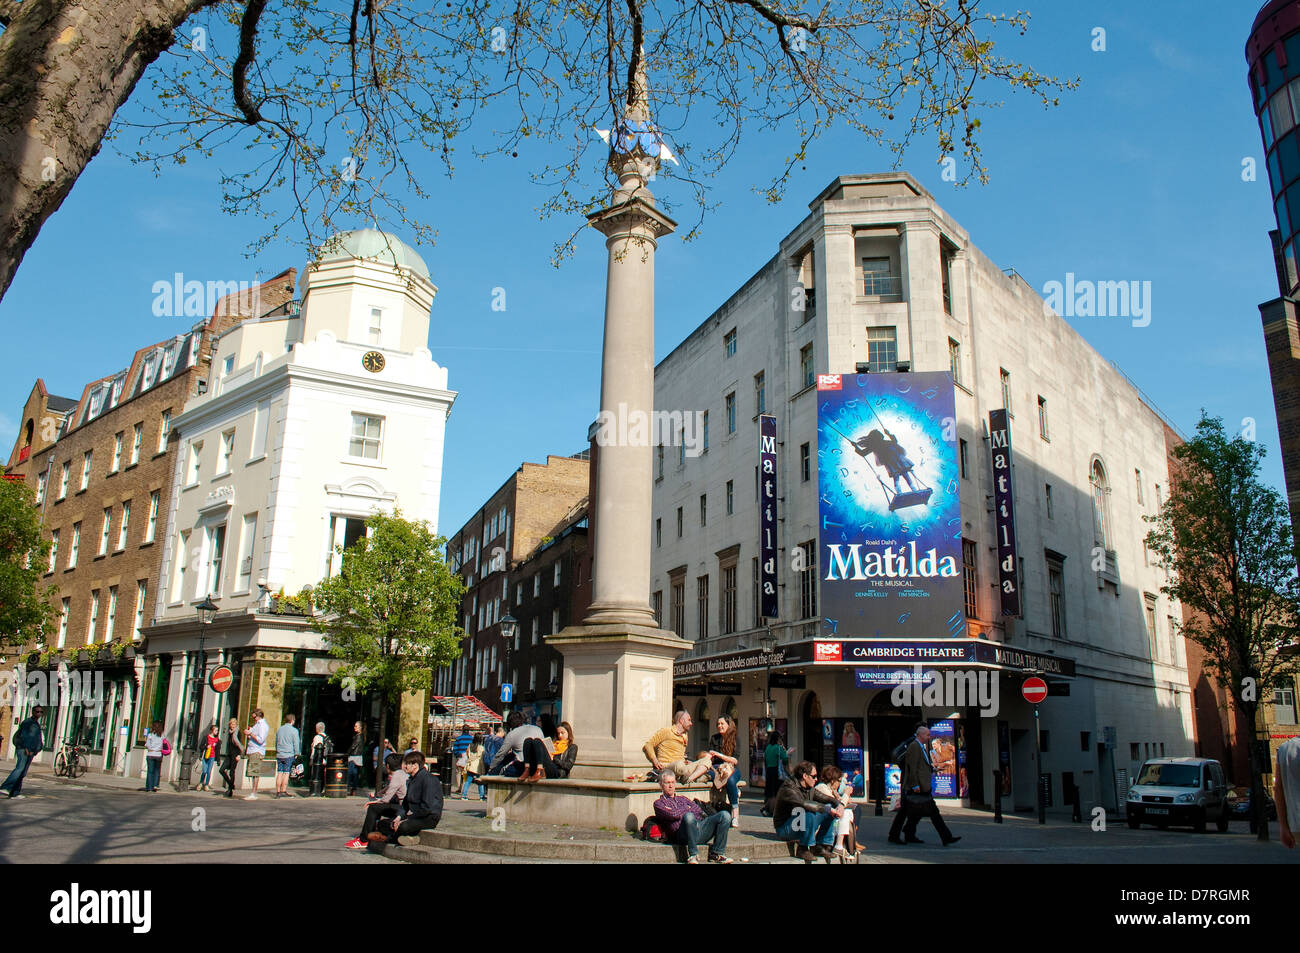 The Seven Dials sundial pillar and Cambridge Theatre, Covent Garden, London, UK Stock Photo